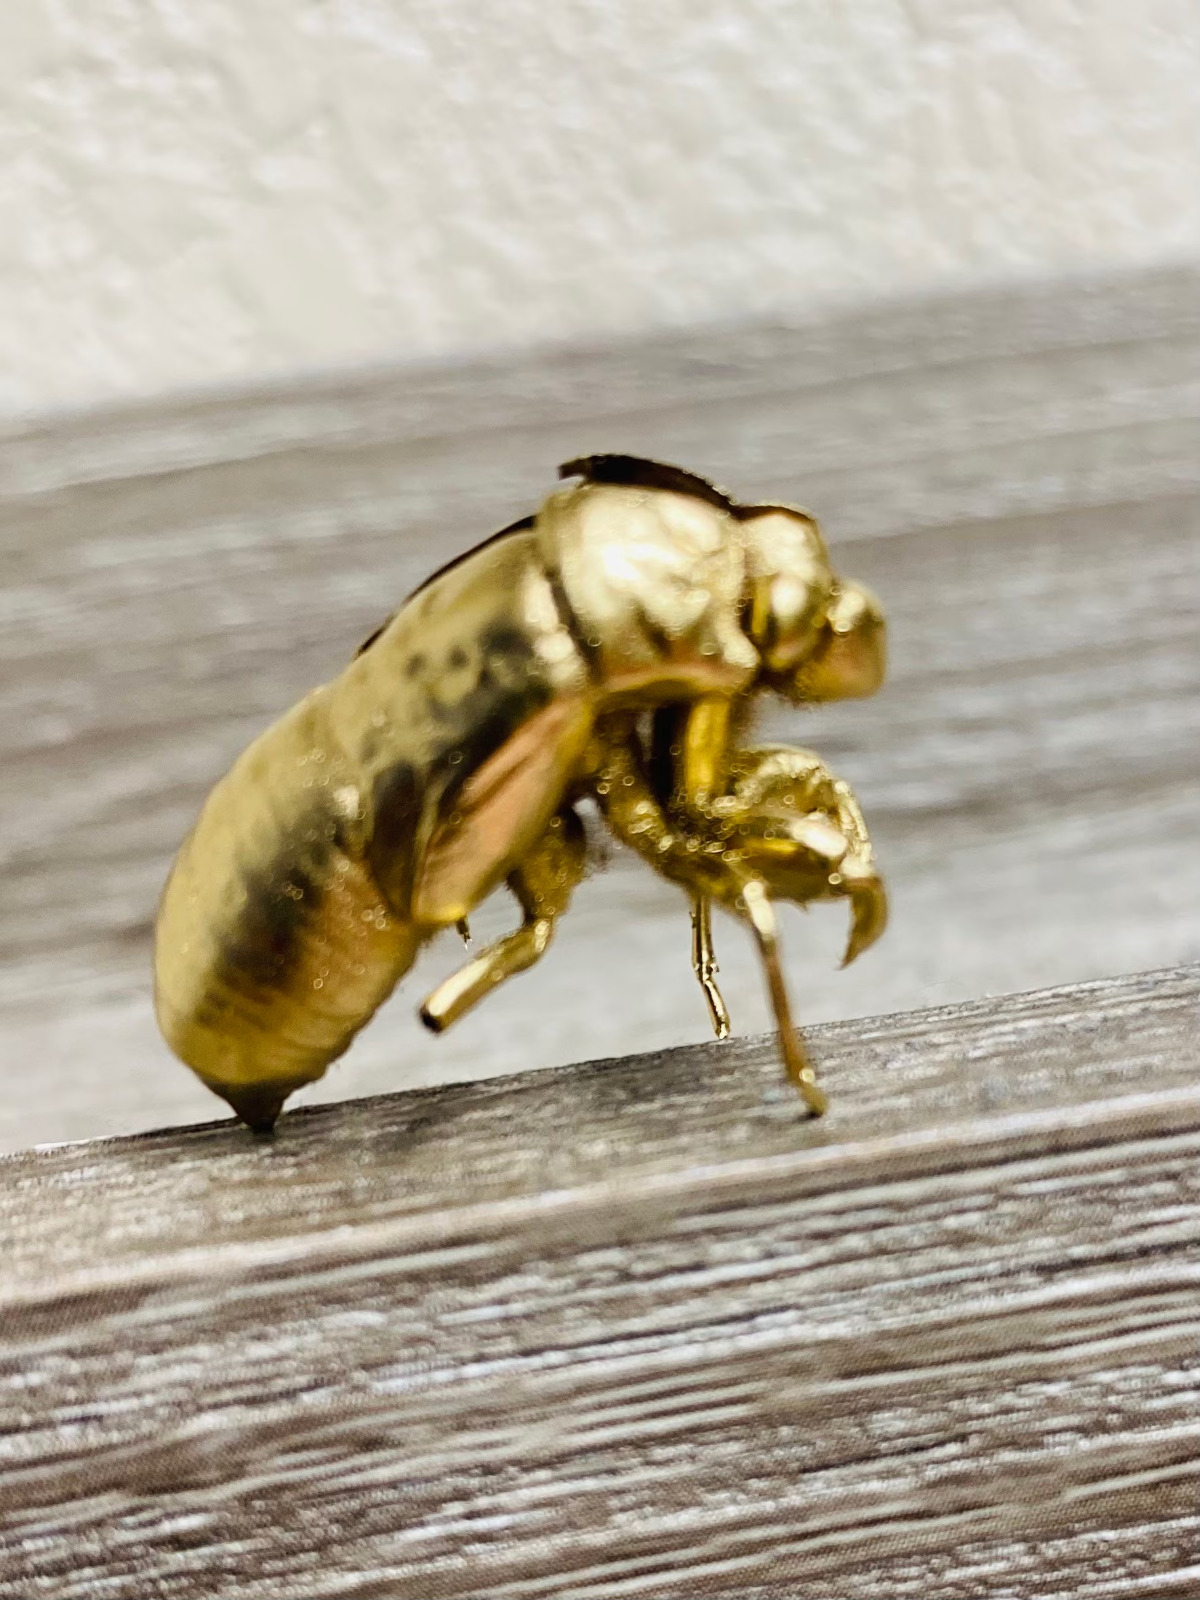 Gold Cicada Skins Shells Exoskeleton - Cicada Skins lot of 10 Educational Creepy